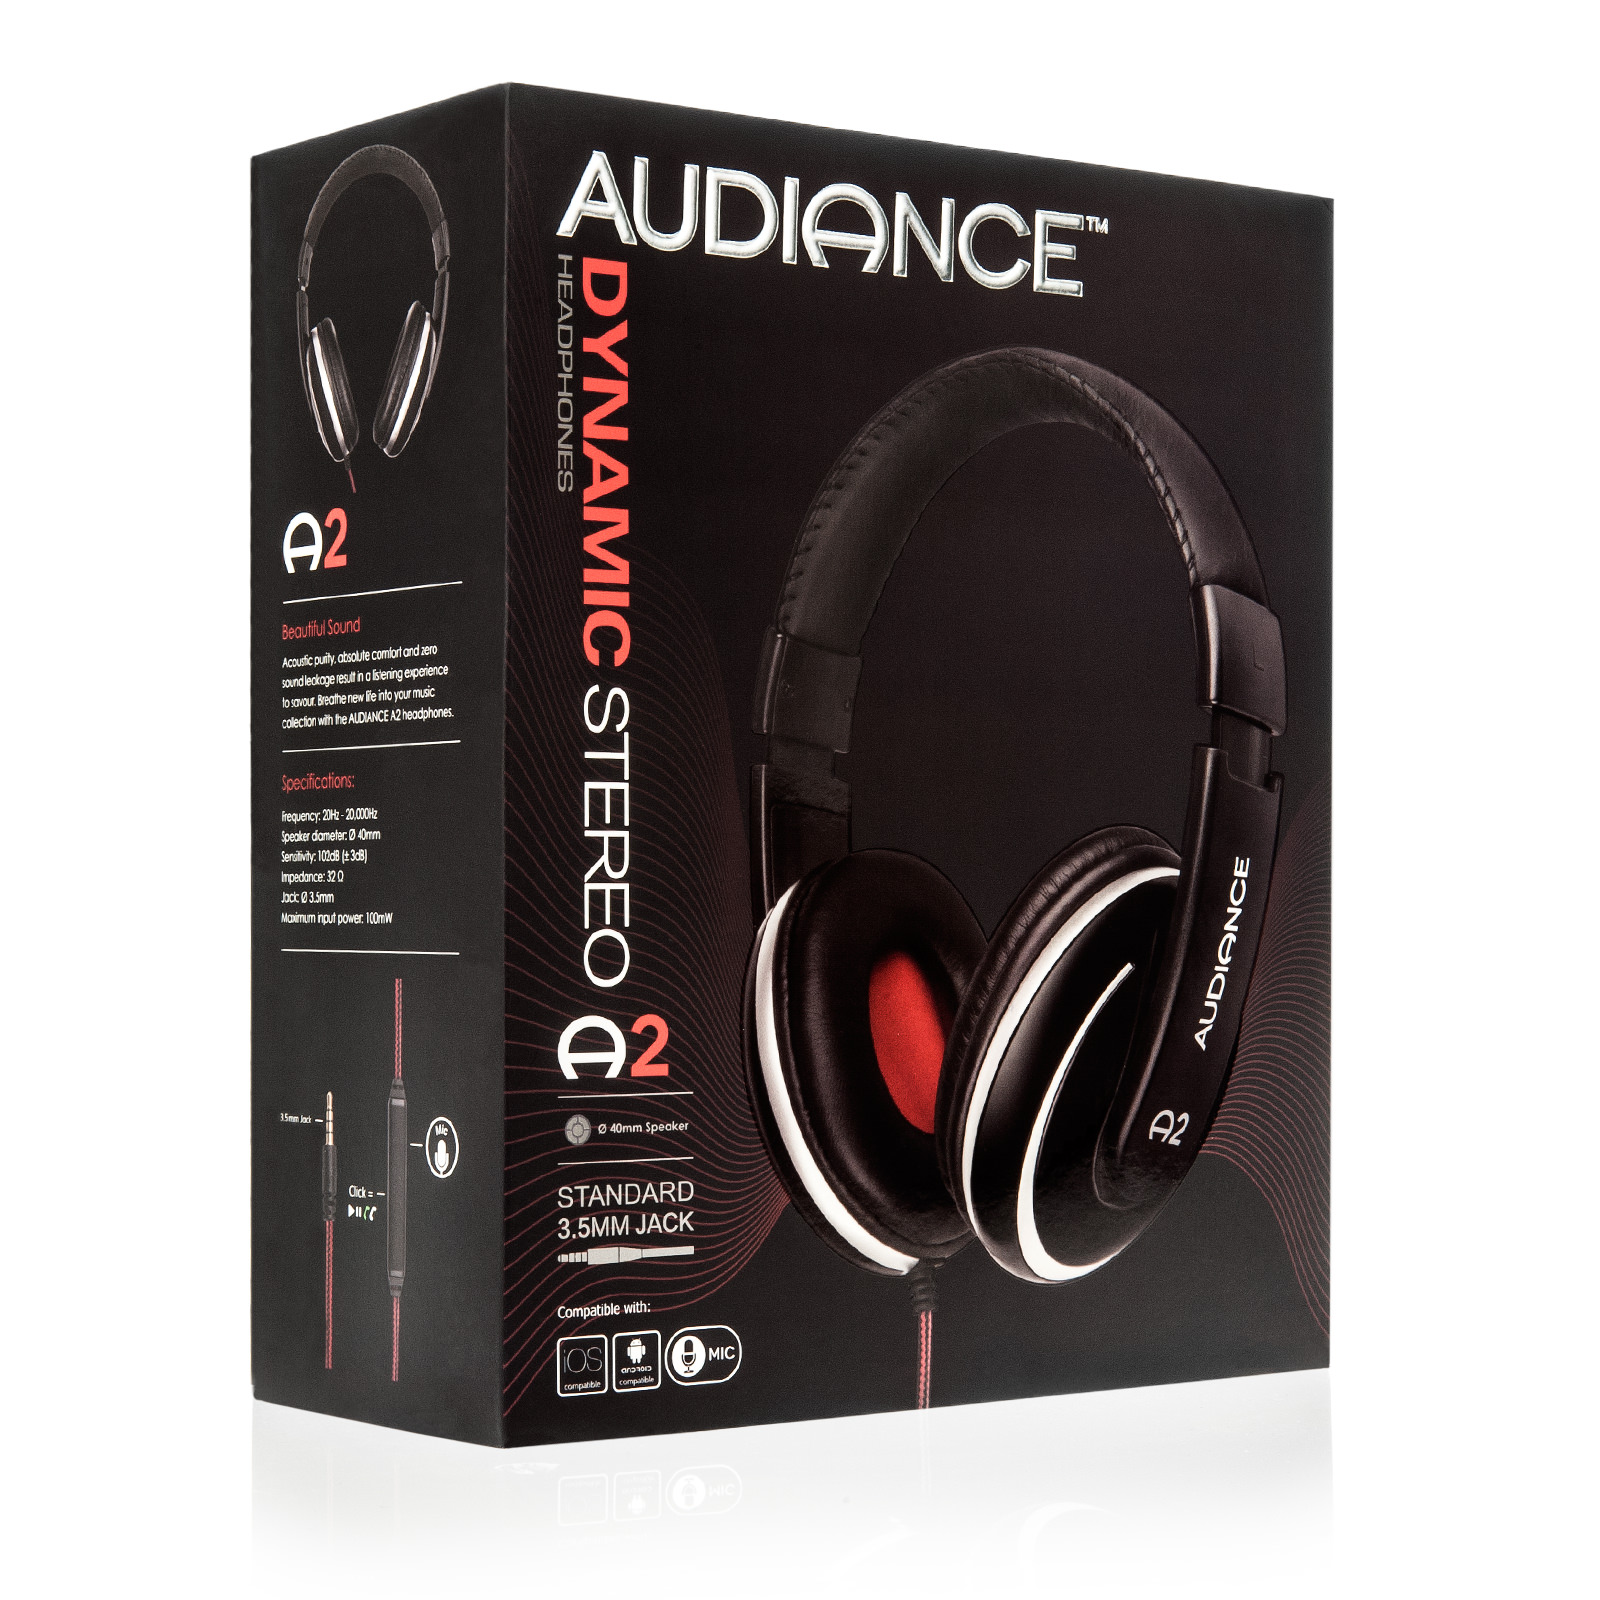 Audiance A2 Headphones - Black/Silver